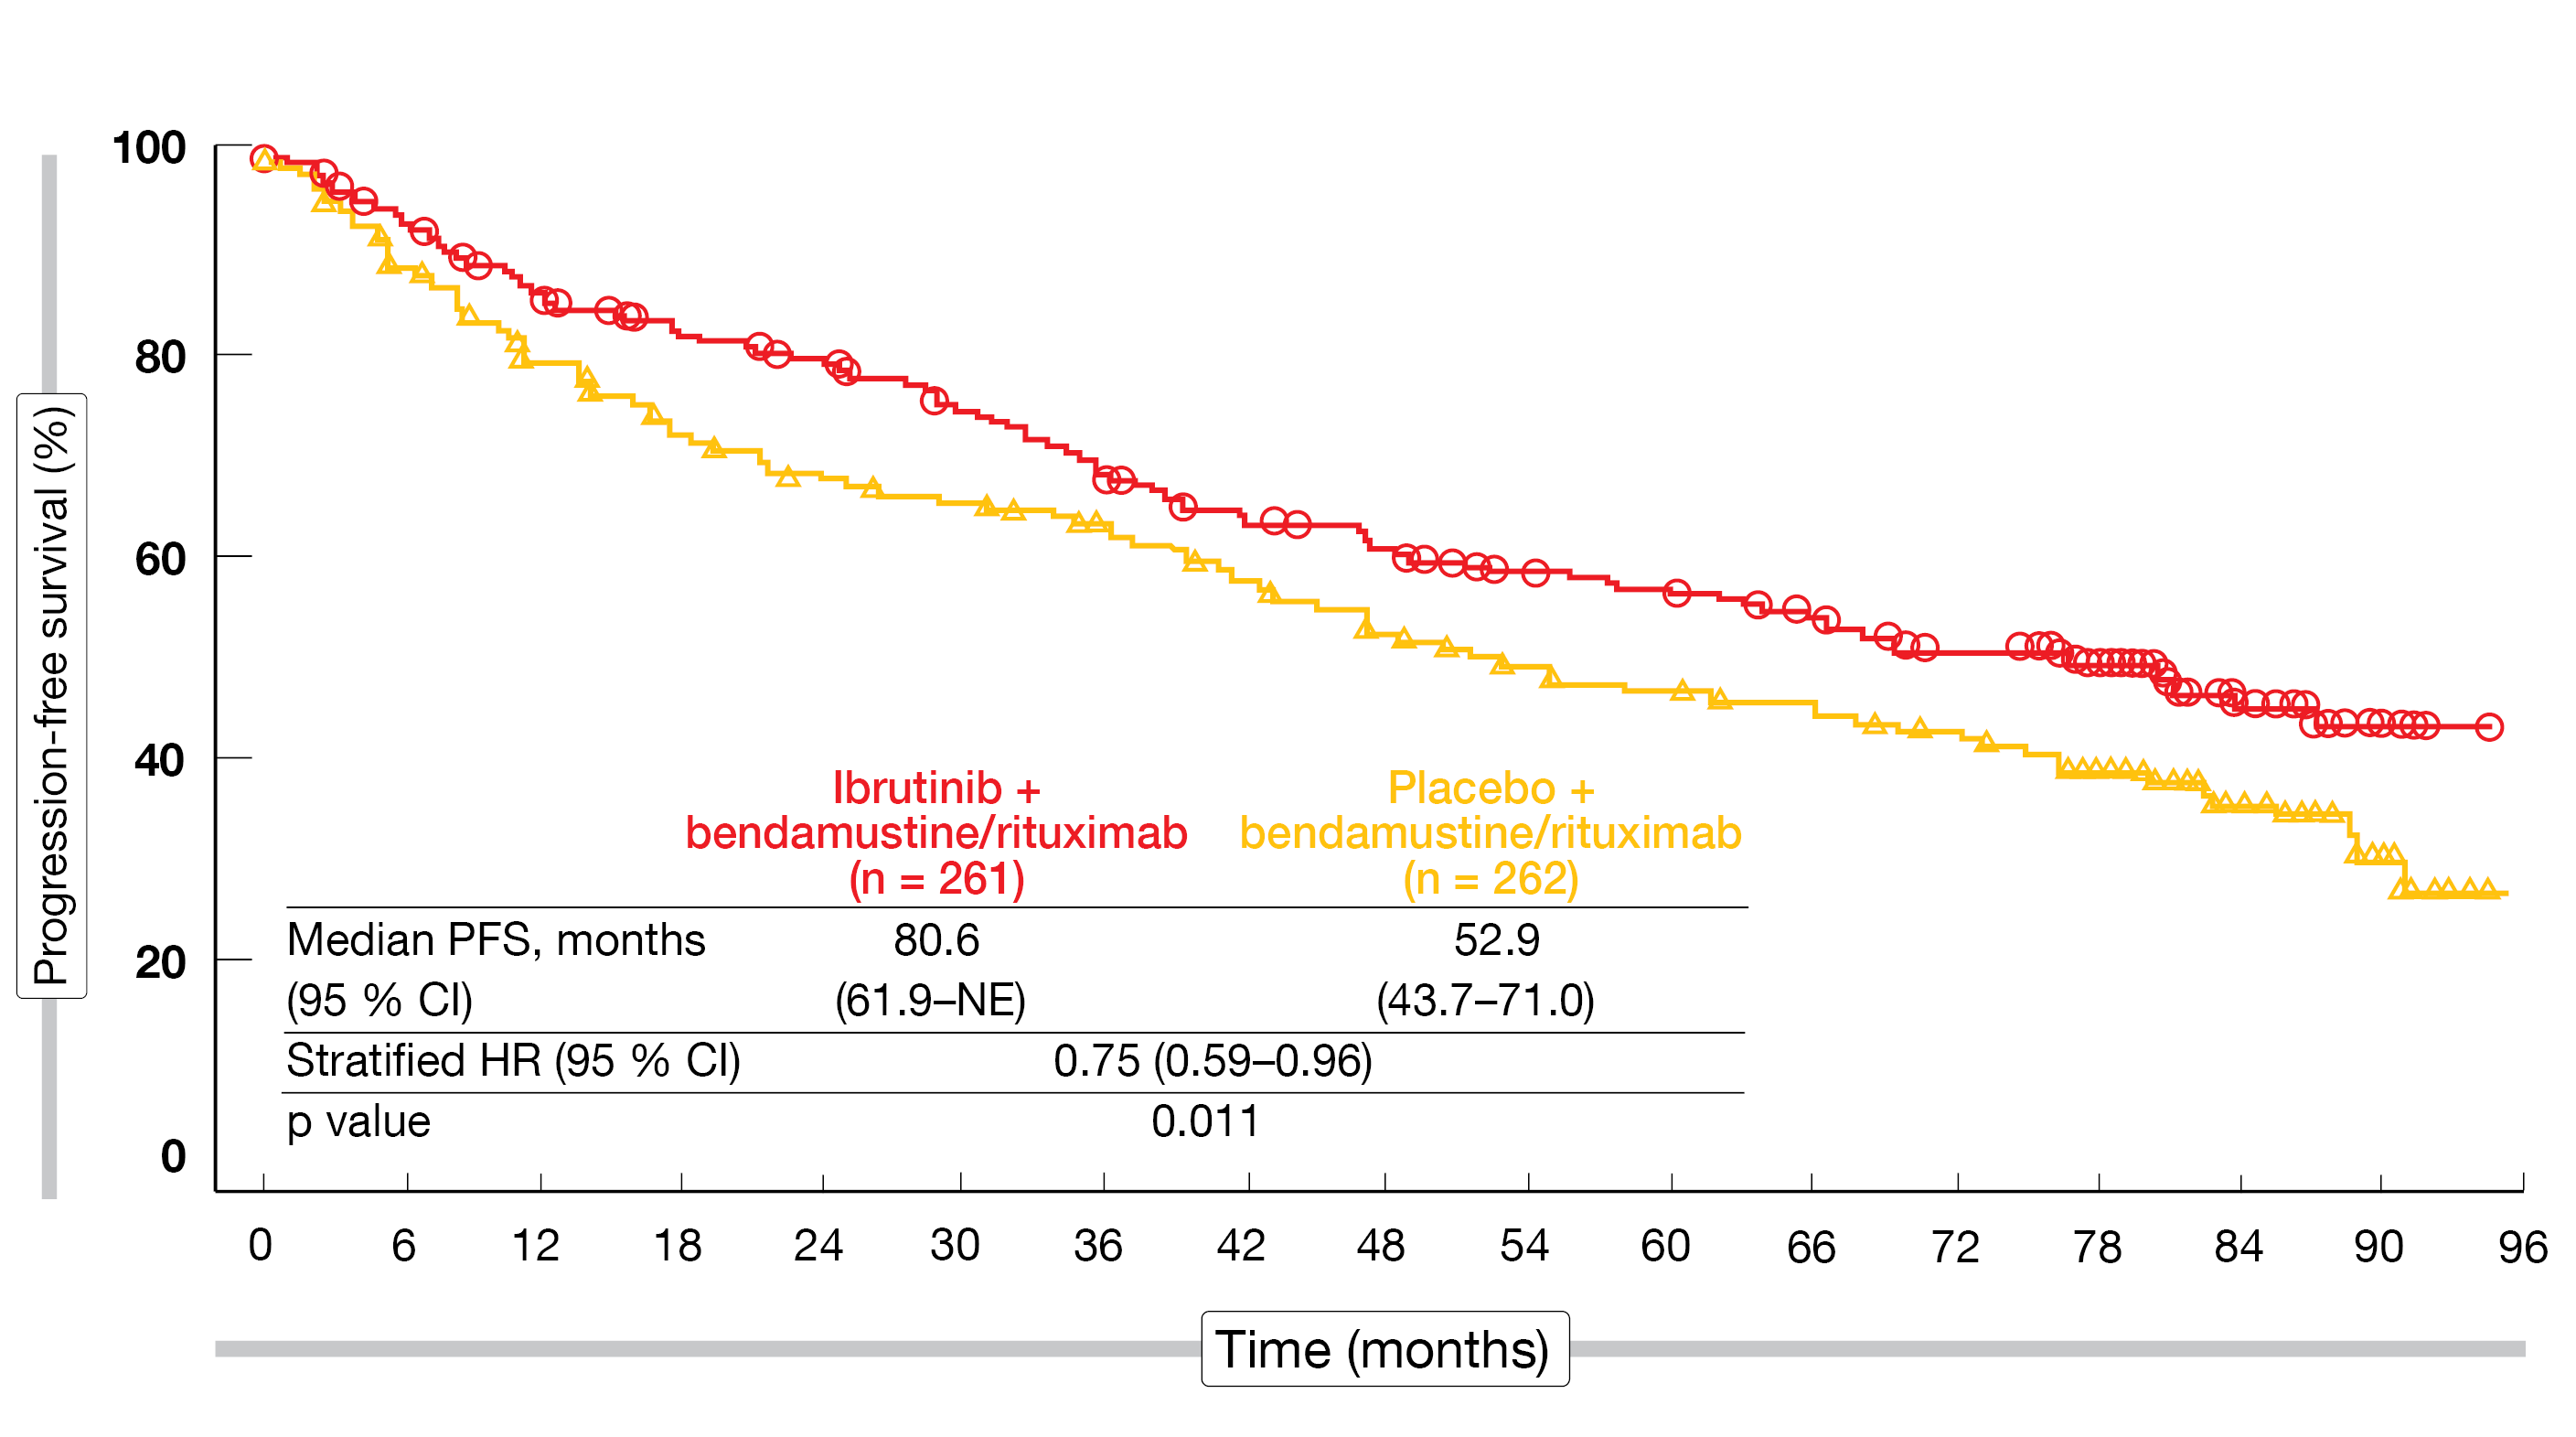 Figure: Improved progression-free survival with ibrutinib plus chemoimmunotherapy vs. placebo plus chemoimmunotherapy in the SHINE study